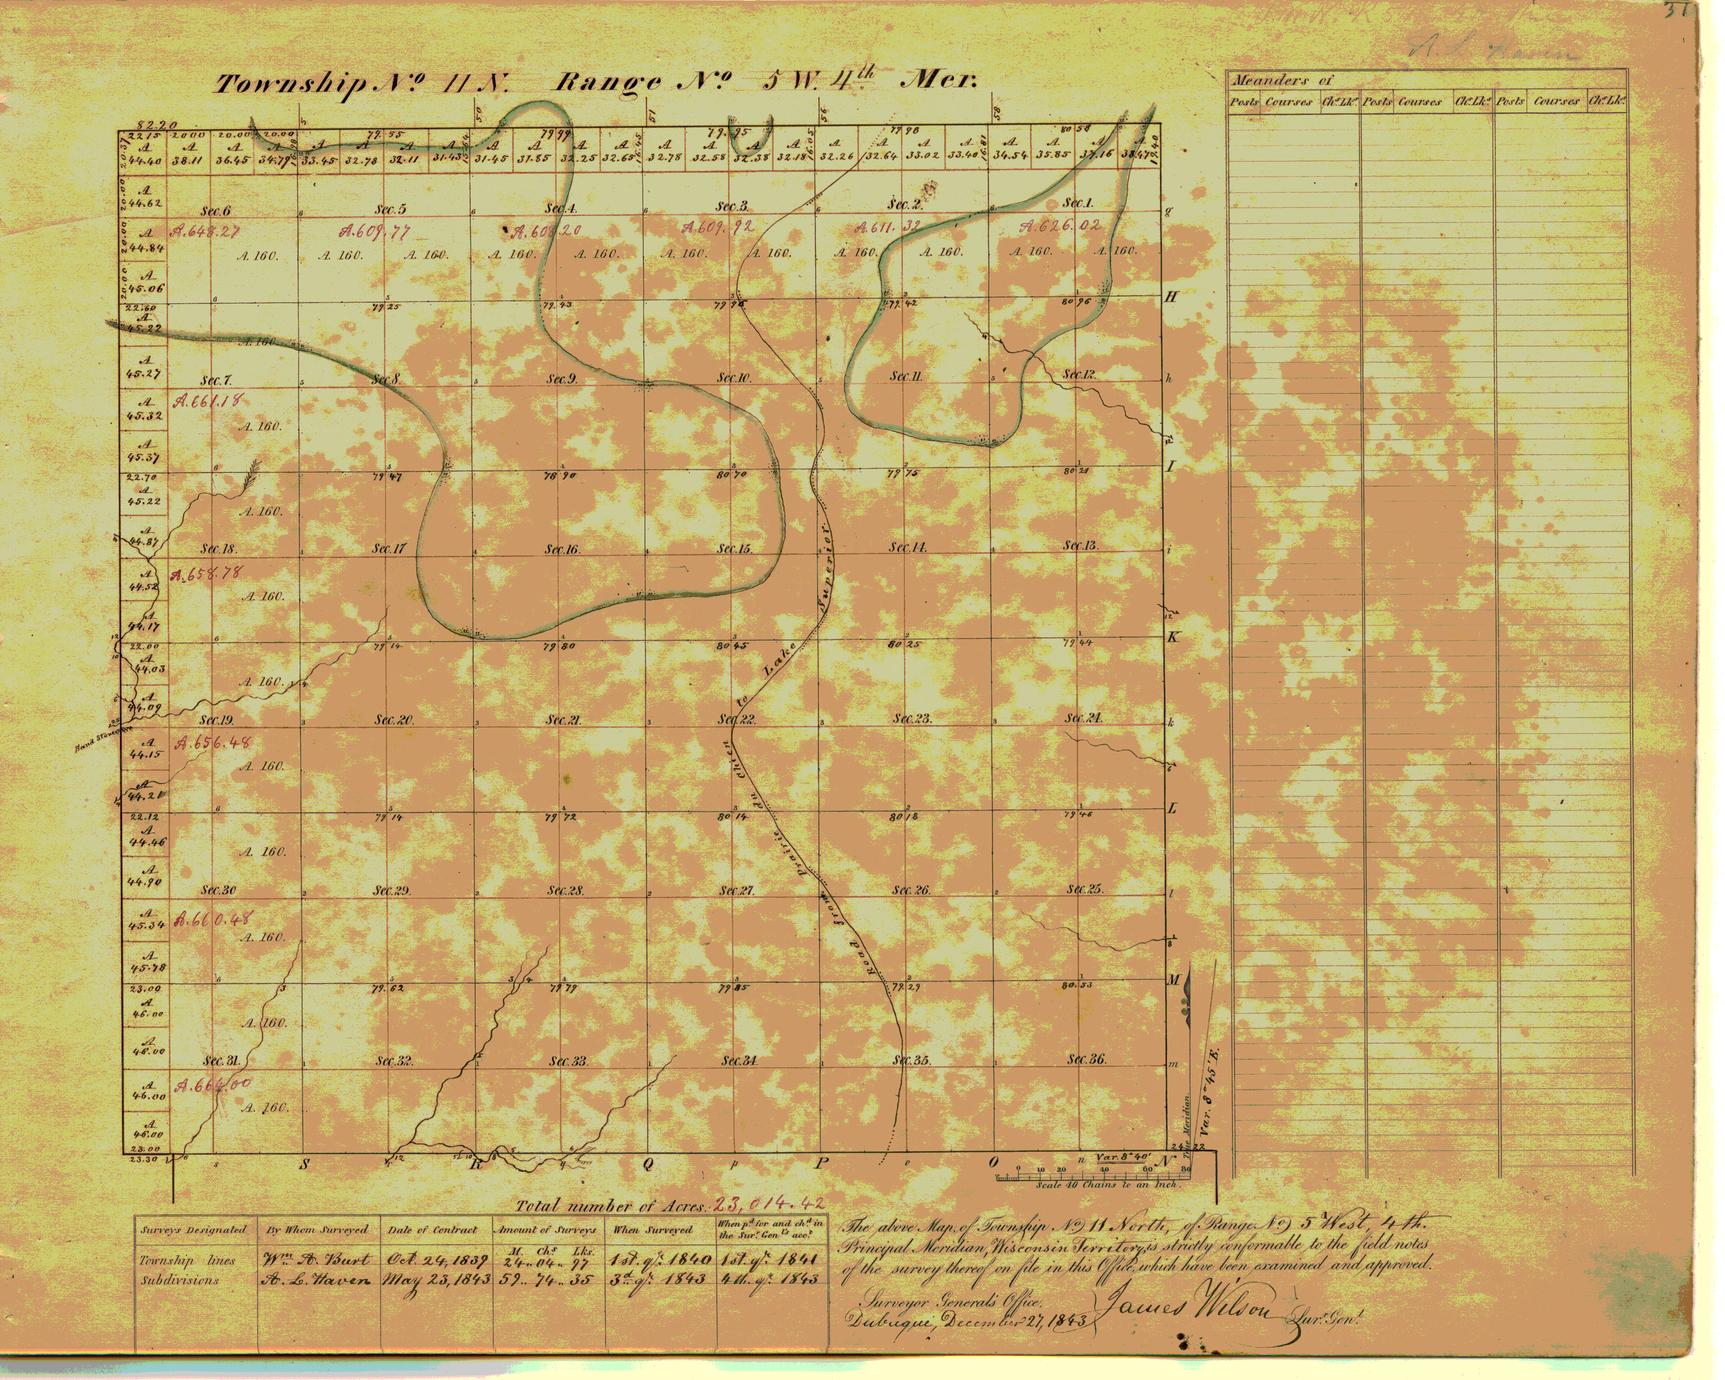 [Public Land Survey System map: Wisconsin Township 11 North, Range 05 West]